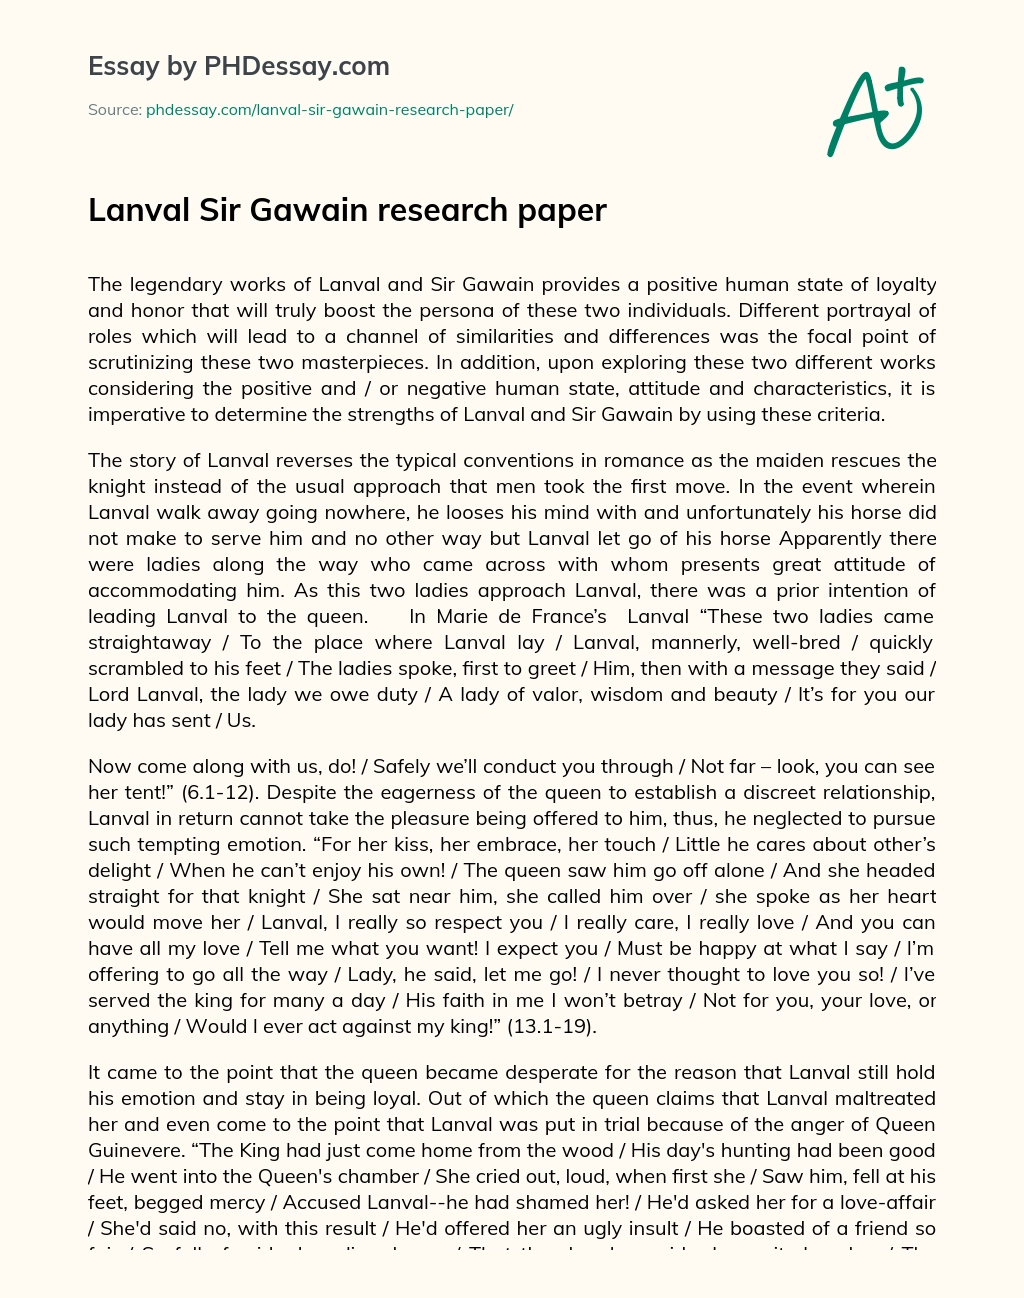 Lanval Sir Gawain research paper essay